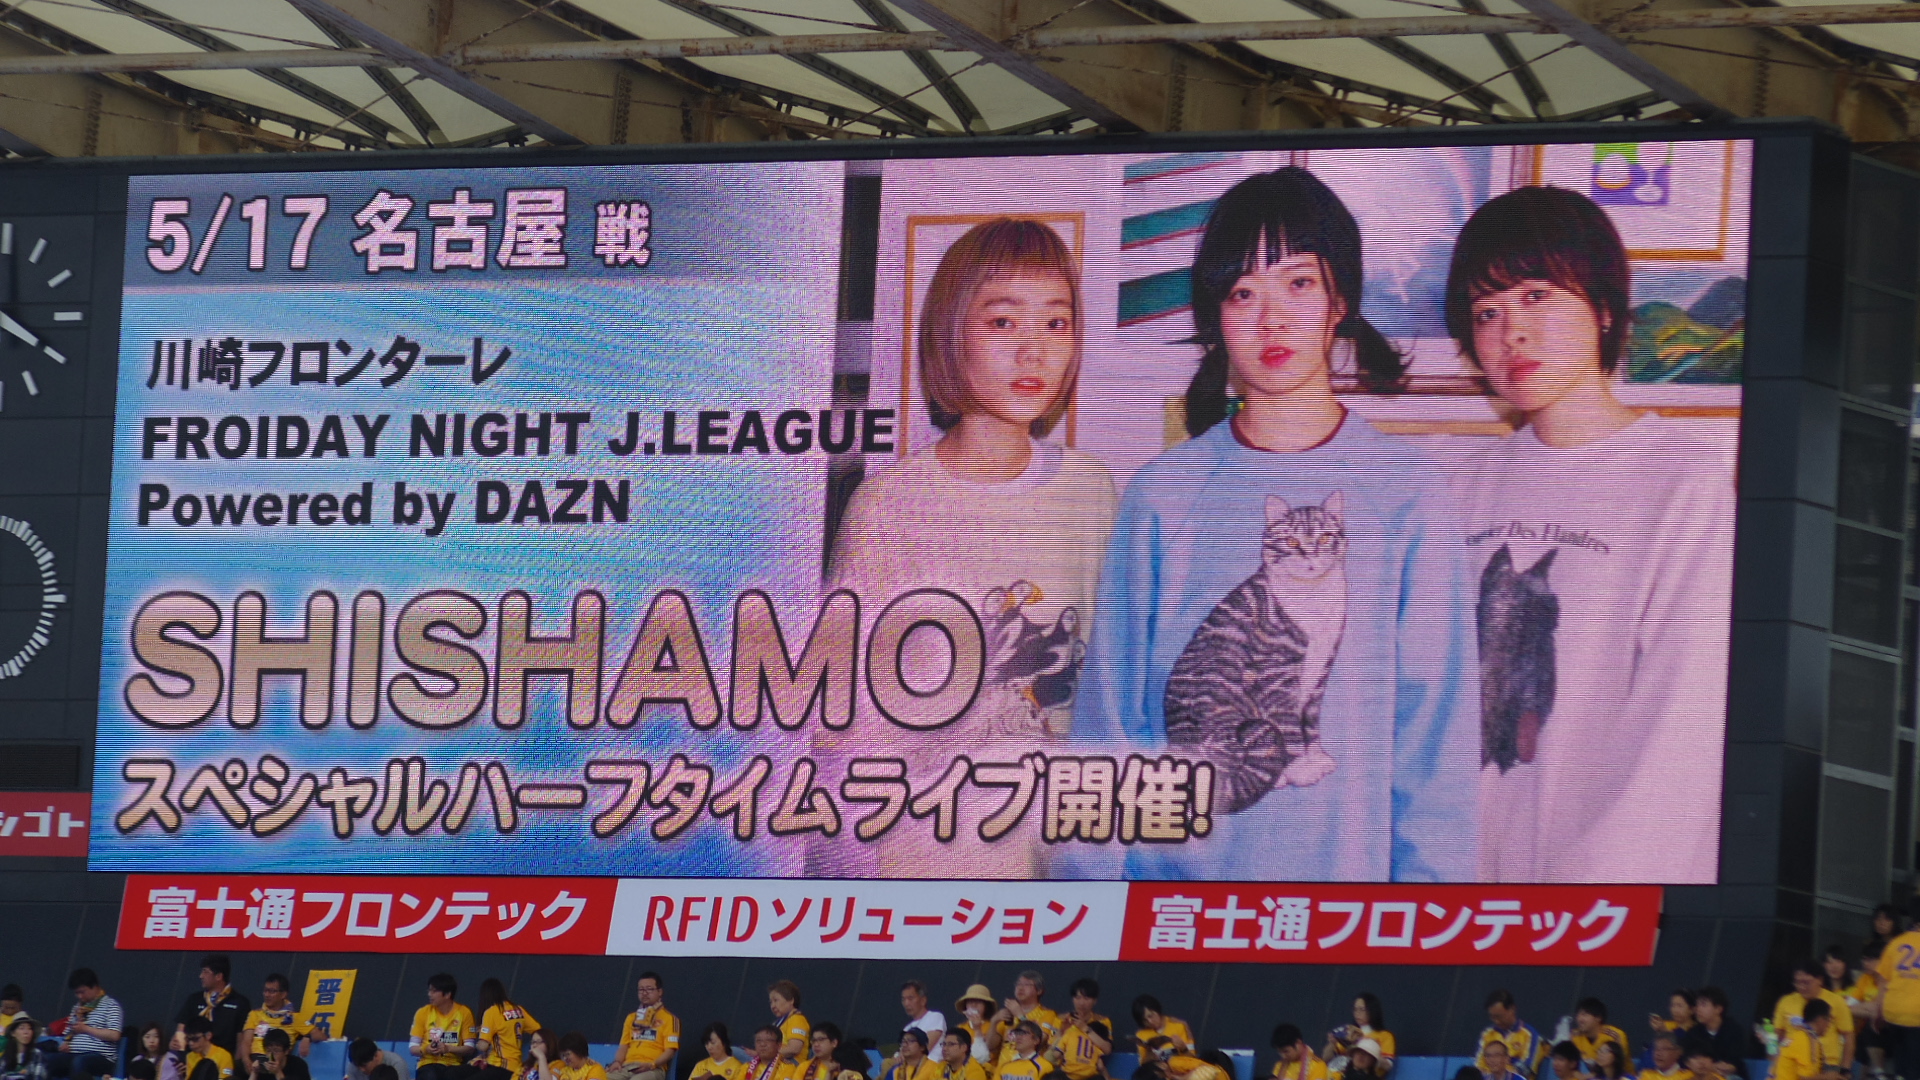 Shishamoのハーフタイムライブが開催決定 明日も Oh 両方聴きたい 川崎フロンターレフロサポのかぶろぐ